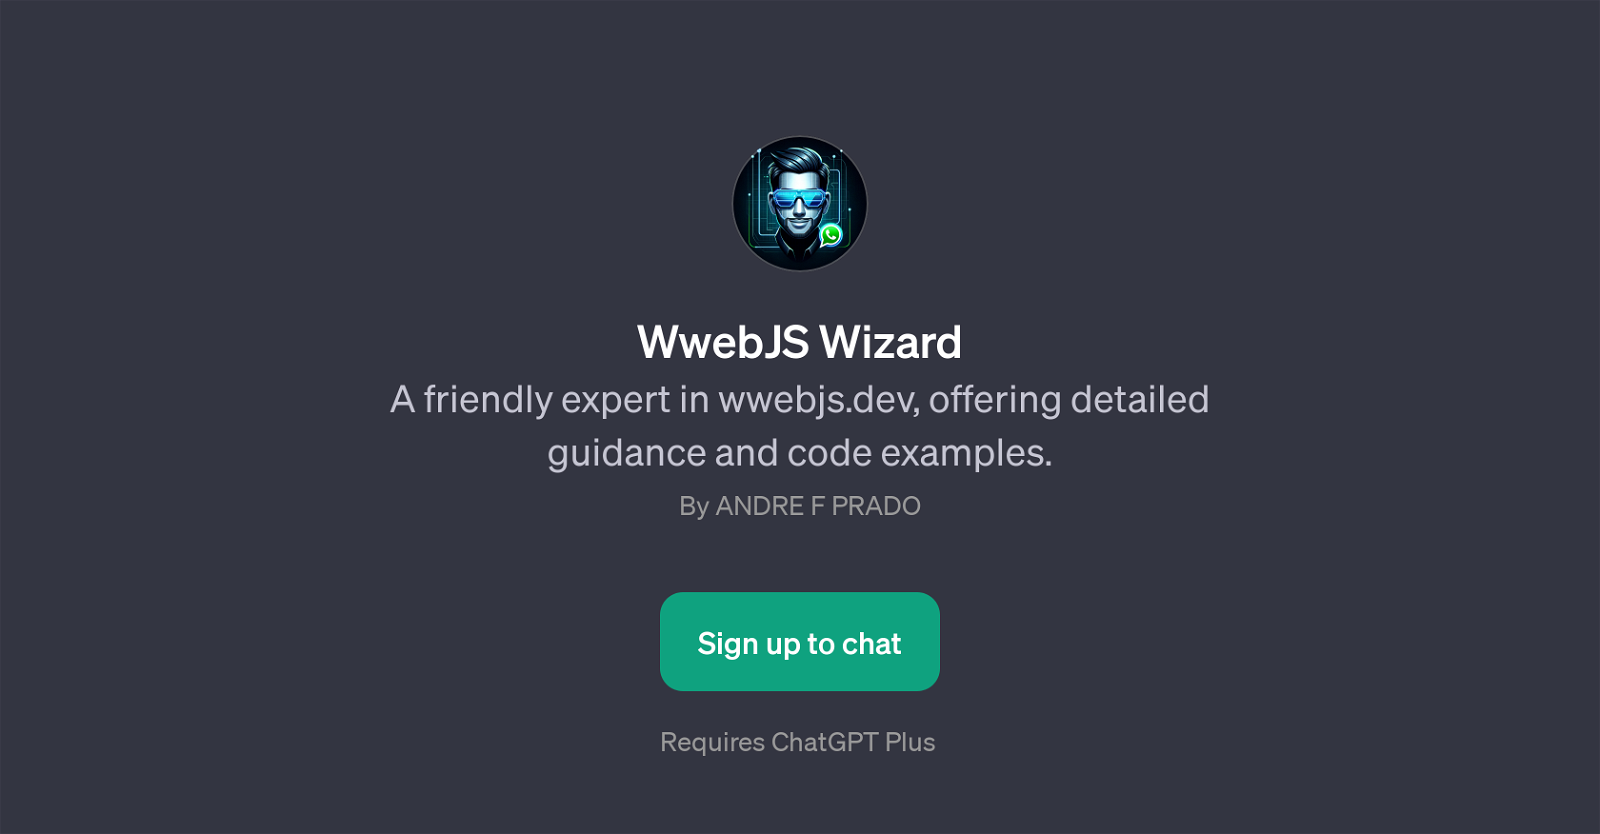 WwebJS Wizard website